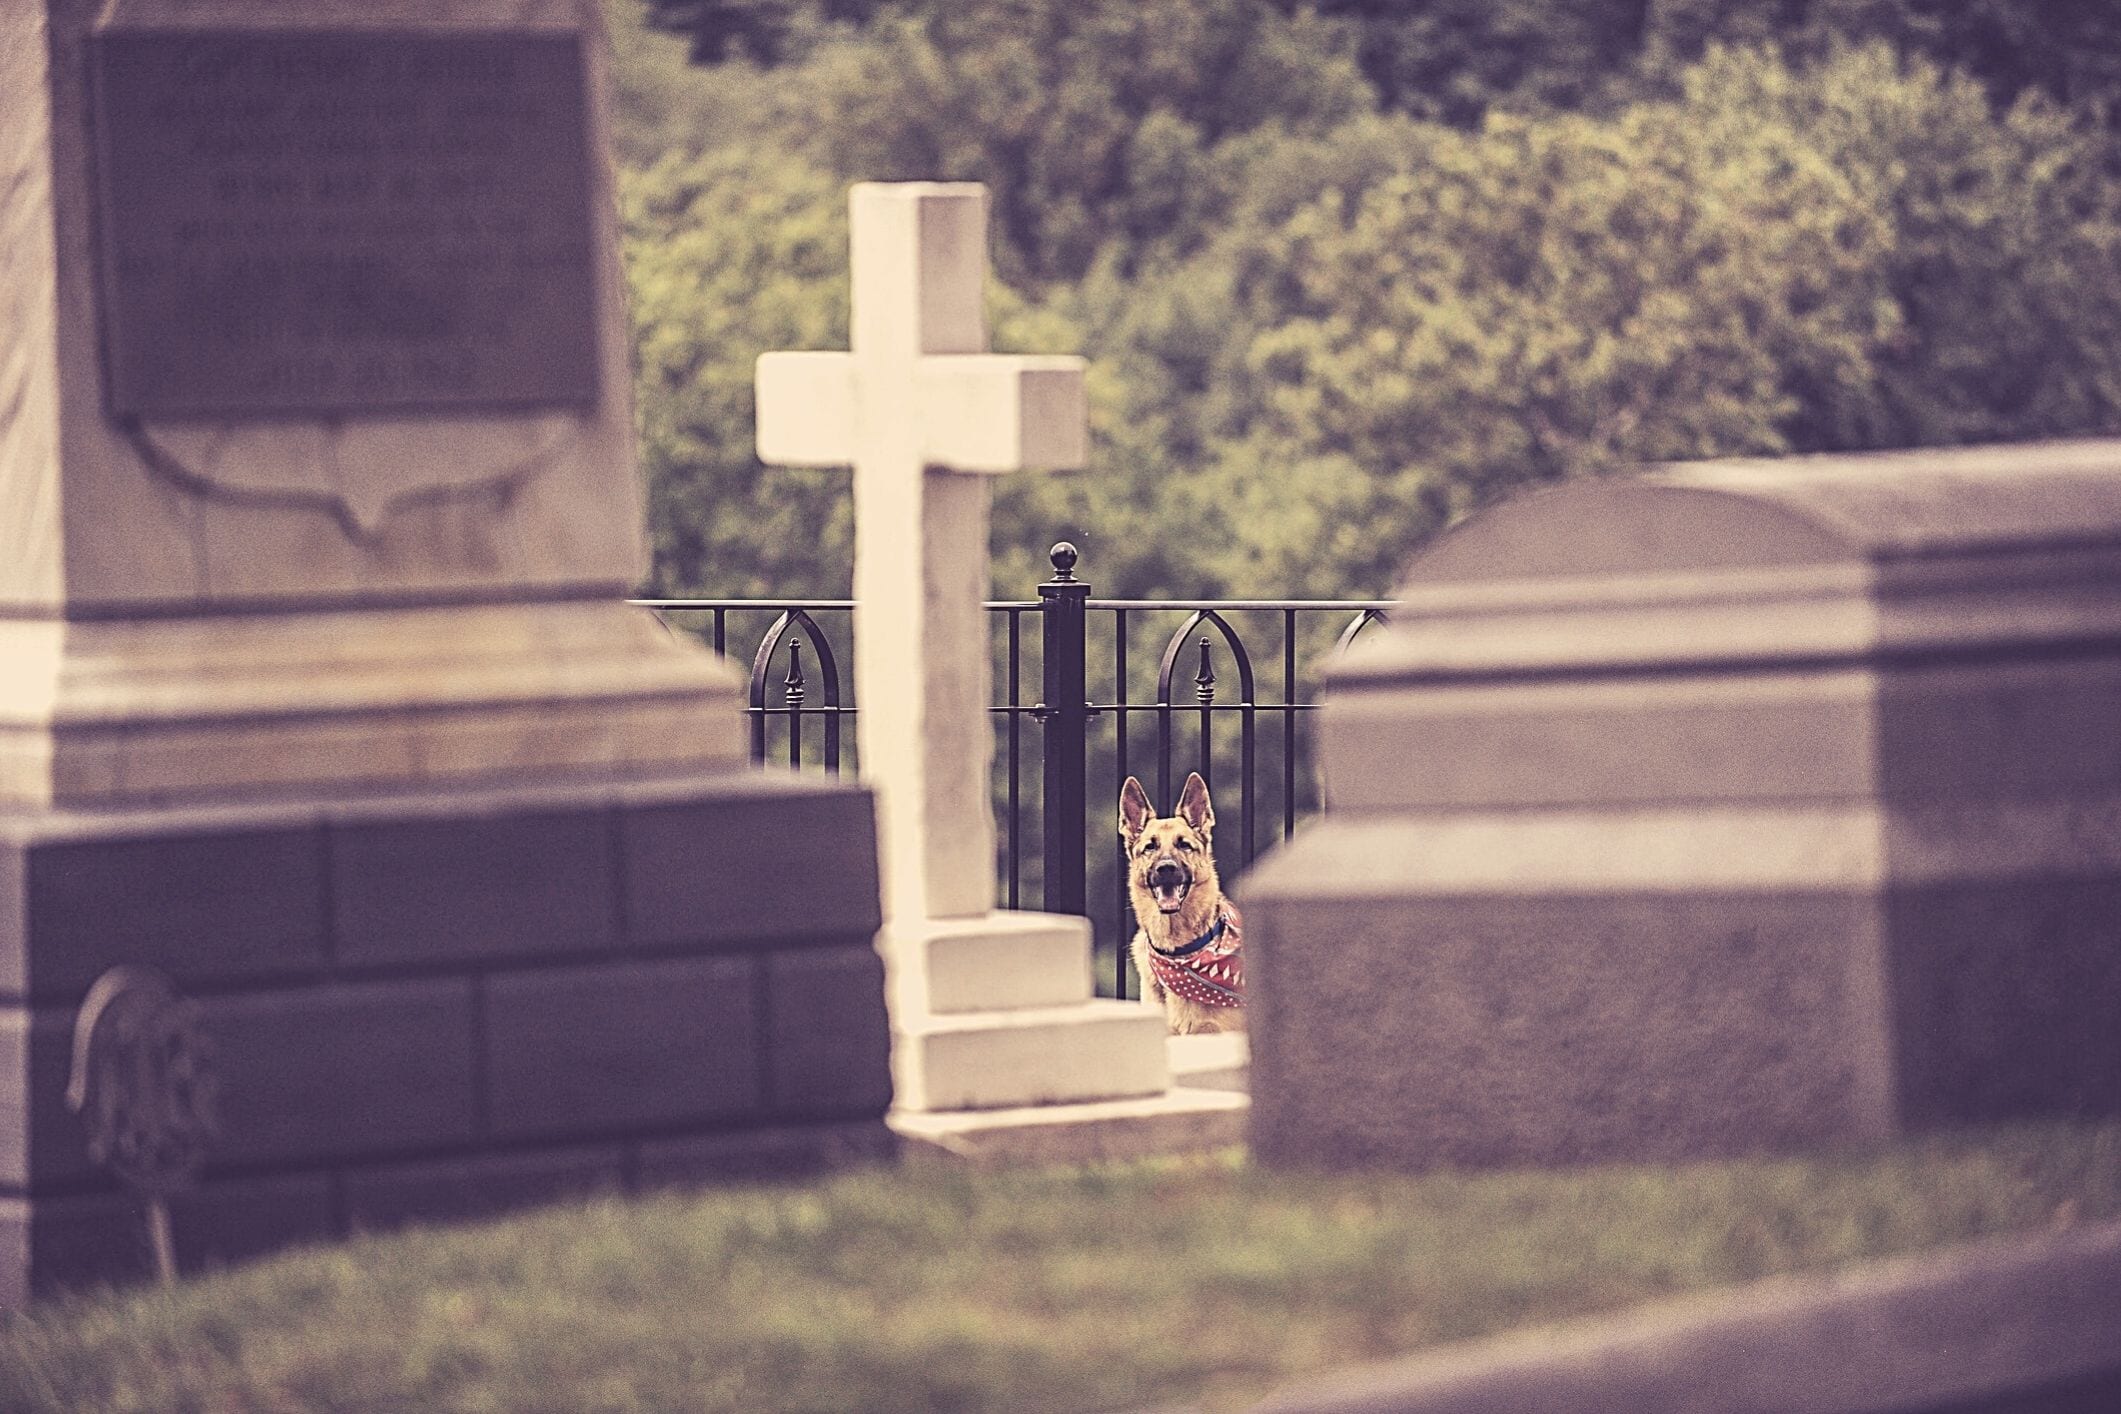 Cemetery bans dog